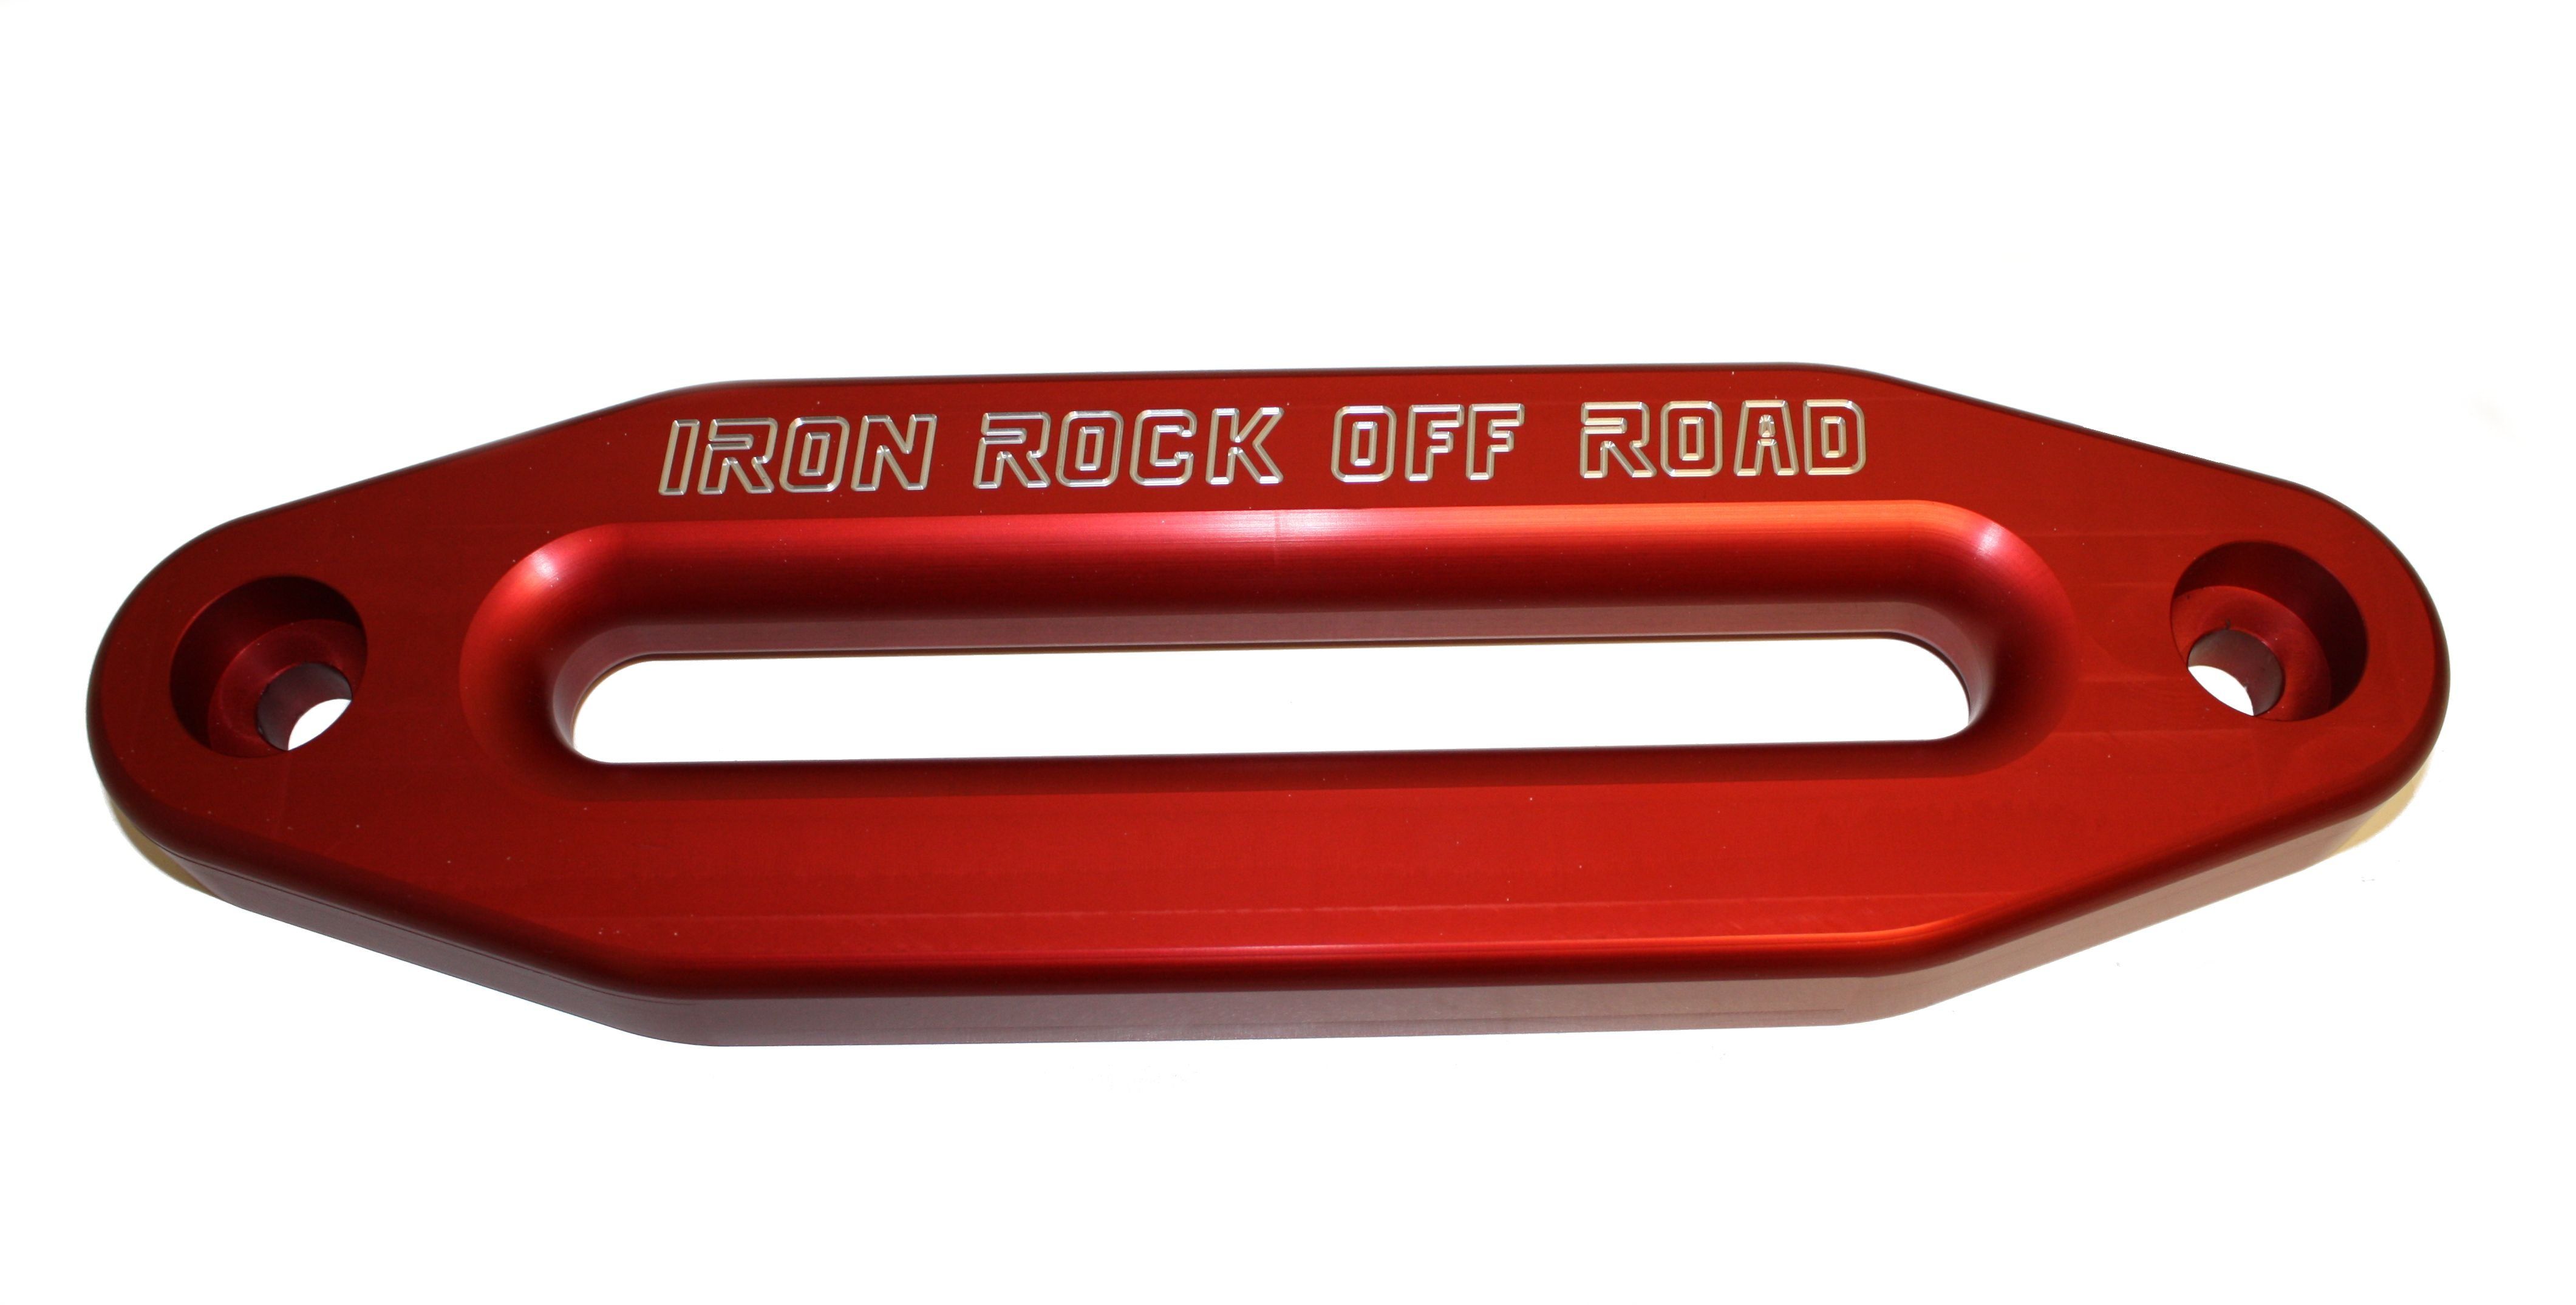 Iron Rock Off Road: Iron Rock Hawse Fairlead